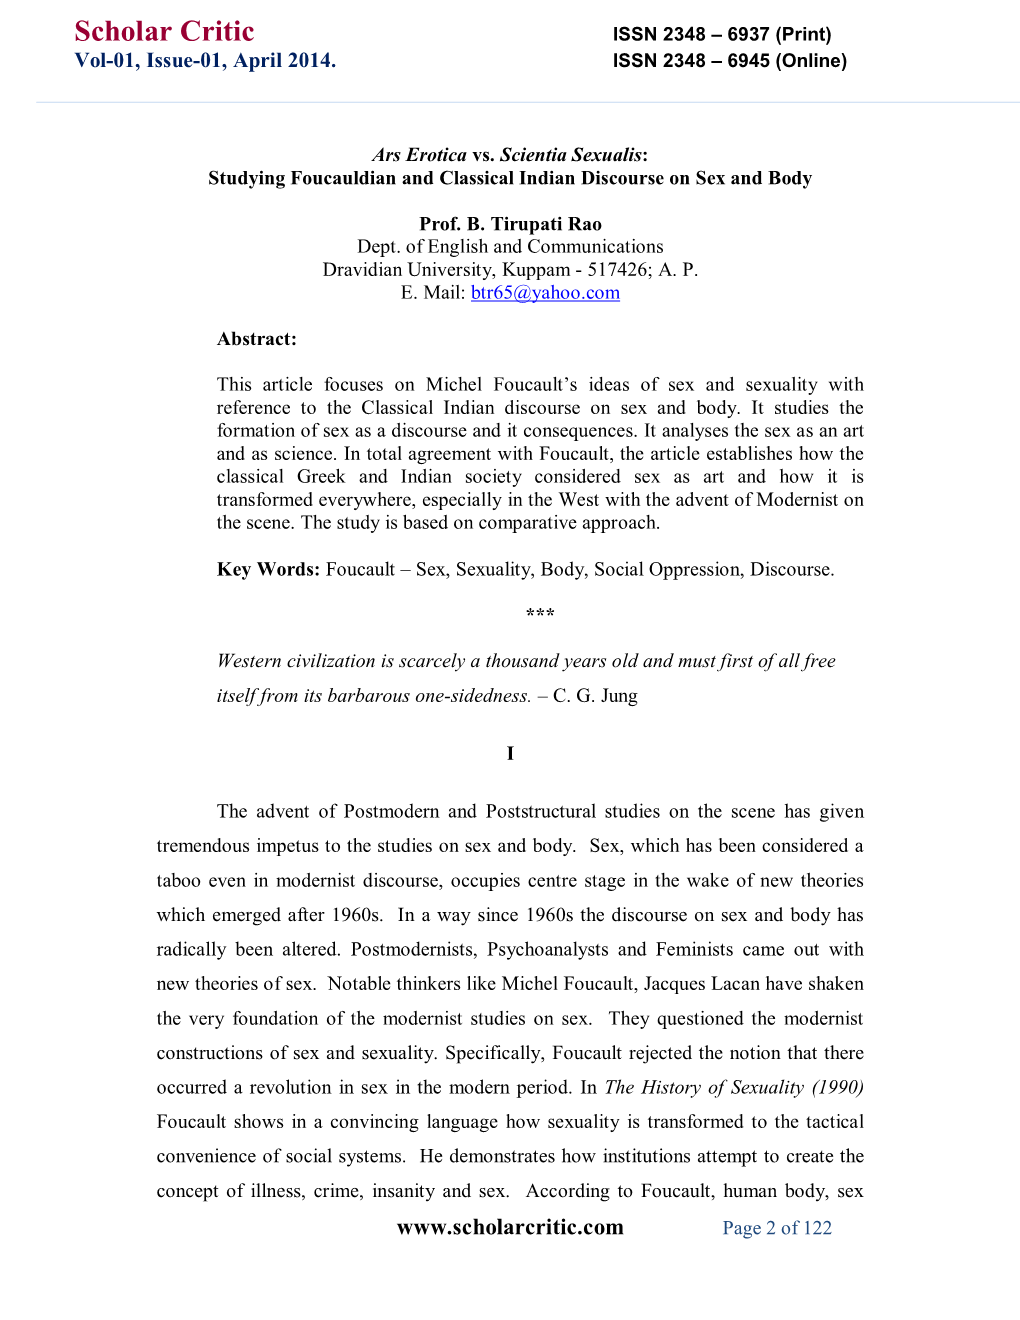 Scholar Critic ISSN 2348 – 6937 (Print) Vol-01, Issue-01, April 2014